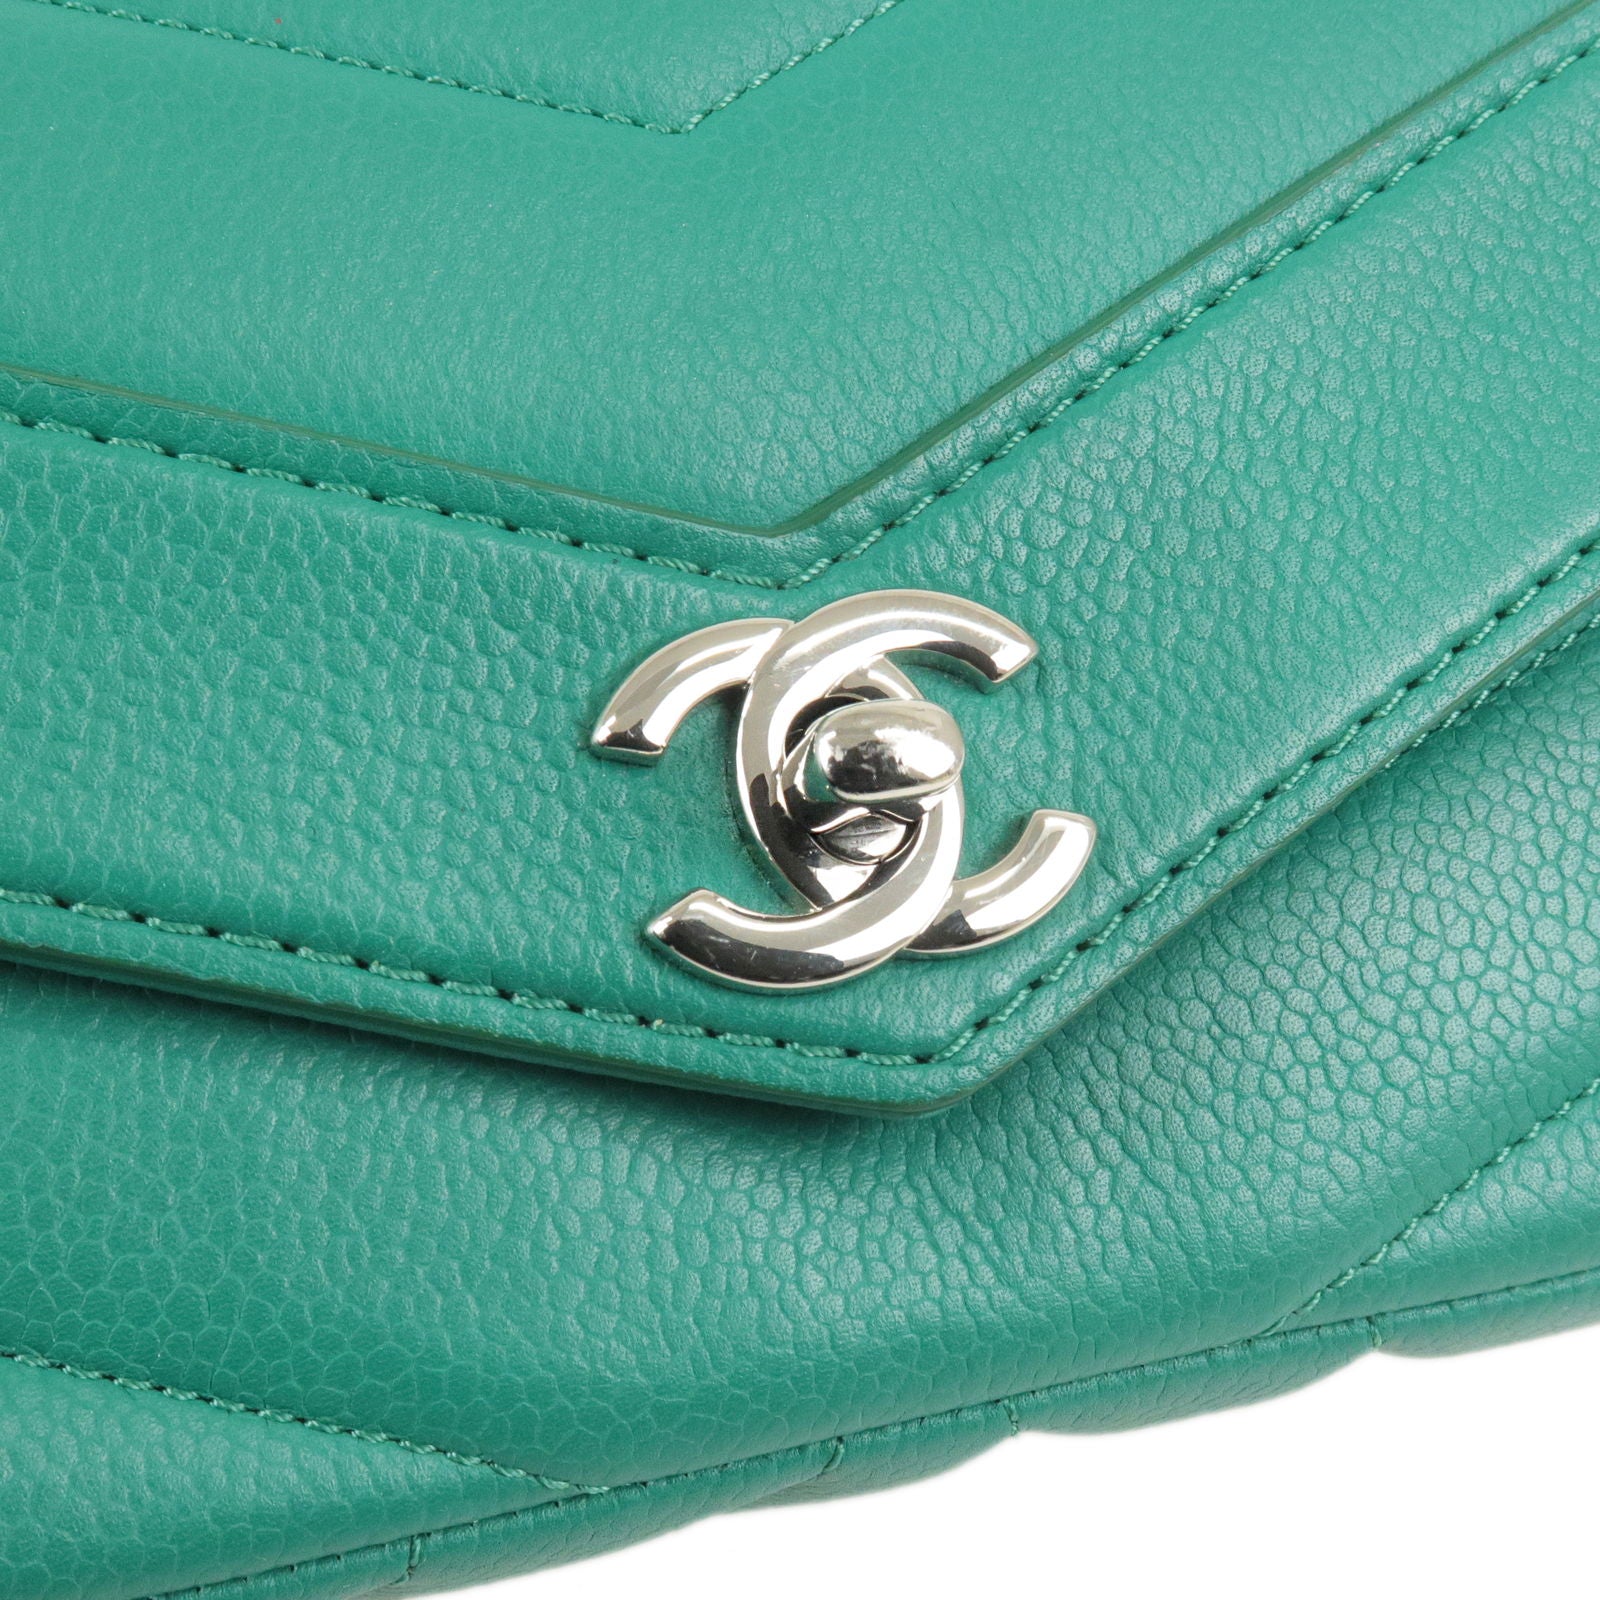 chanel vintage mini flap handbag